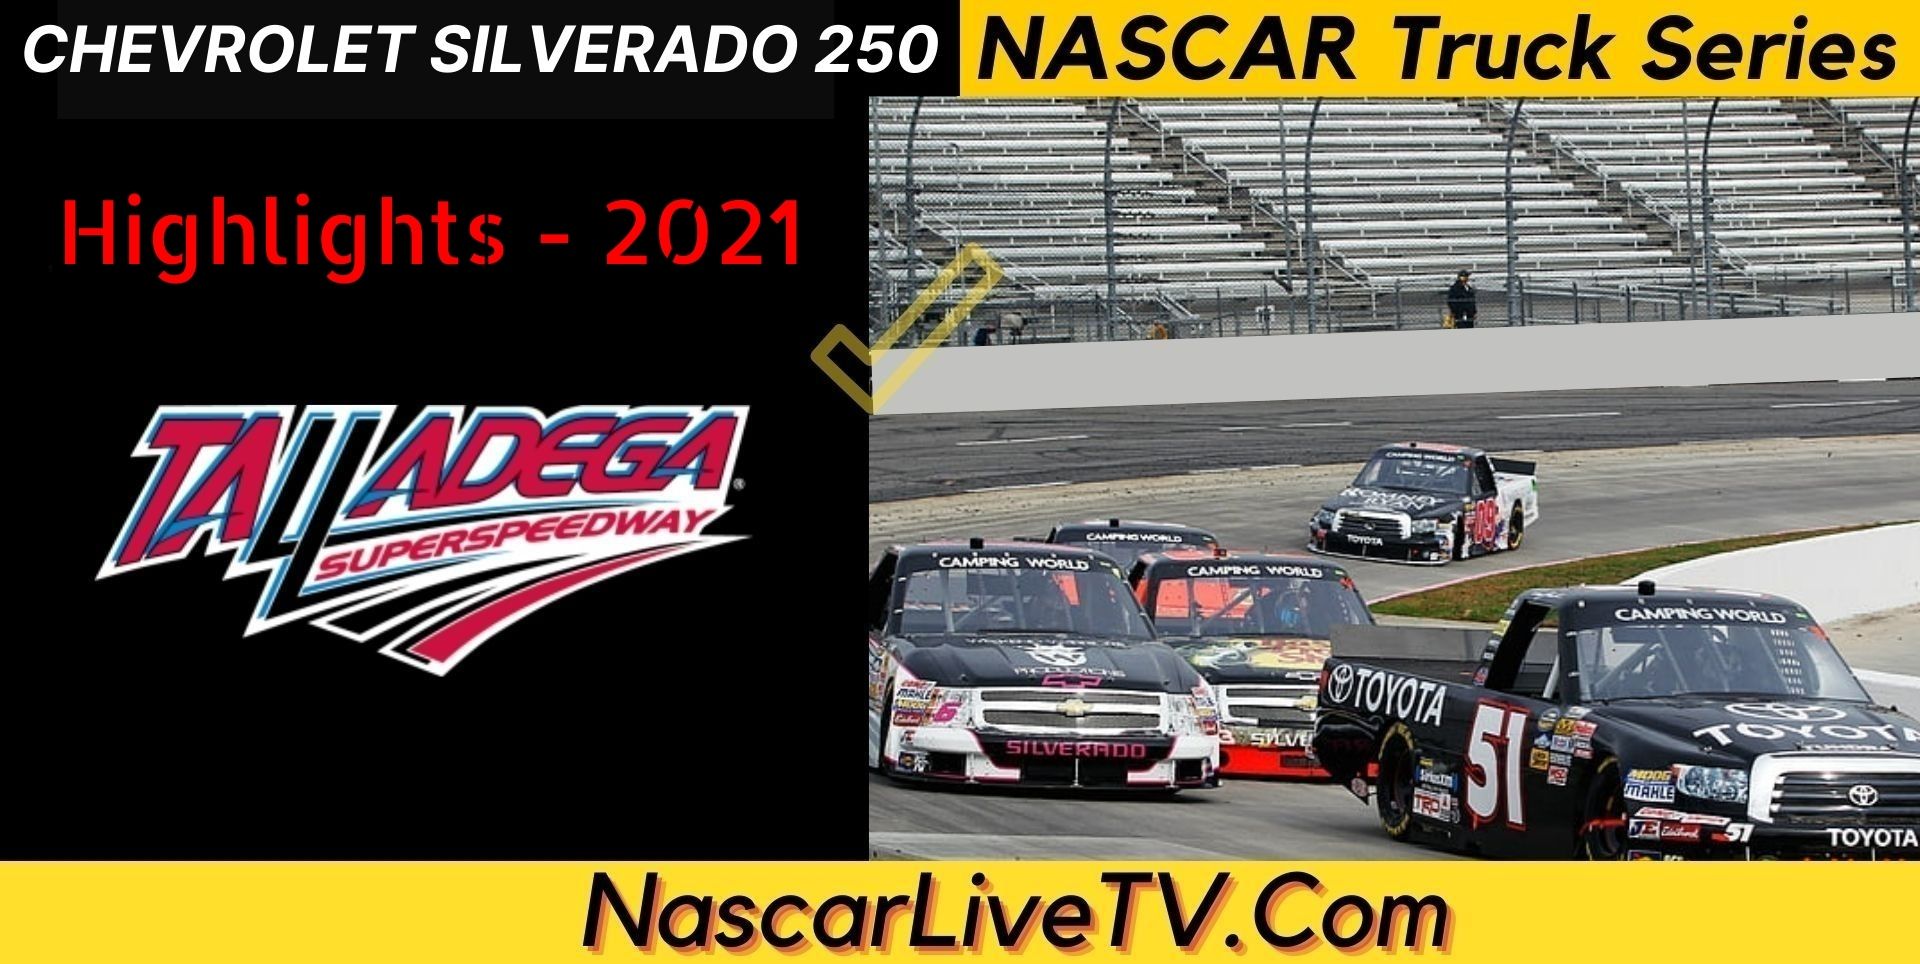 Chevrolet Silverado 250 Highlights NASCAR Truck Series 2021